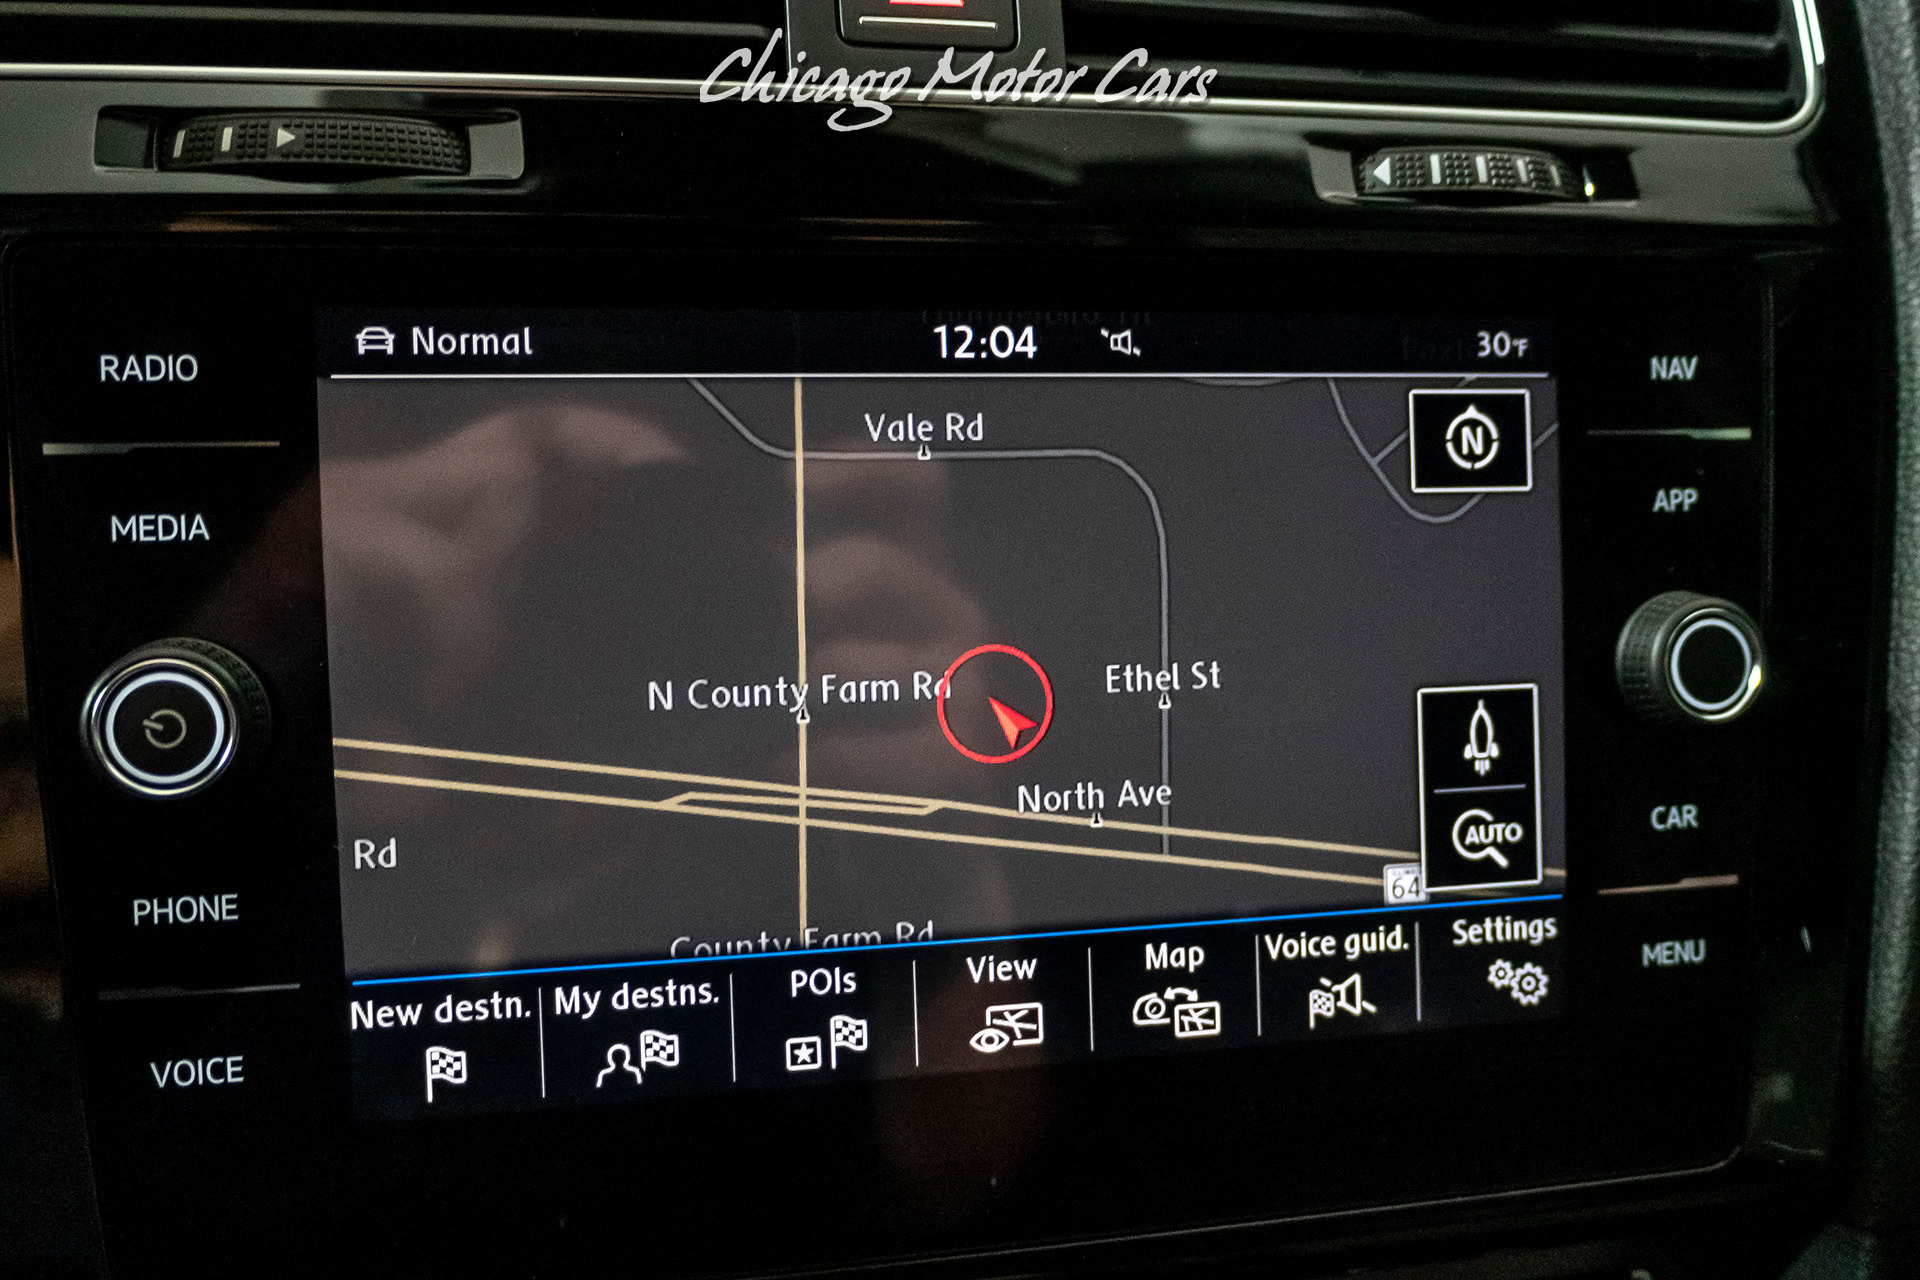 https://www.chicagomotorcars.com/imagetag/6571/20/l/Used-2018-Volkswagen-Golf-R-4MOTION-DSG---DCC-with-Navigation-LOADED.jpg